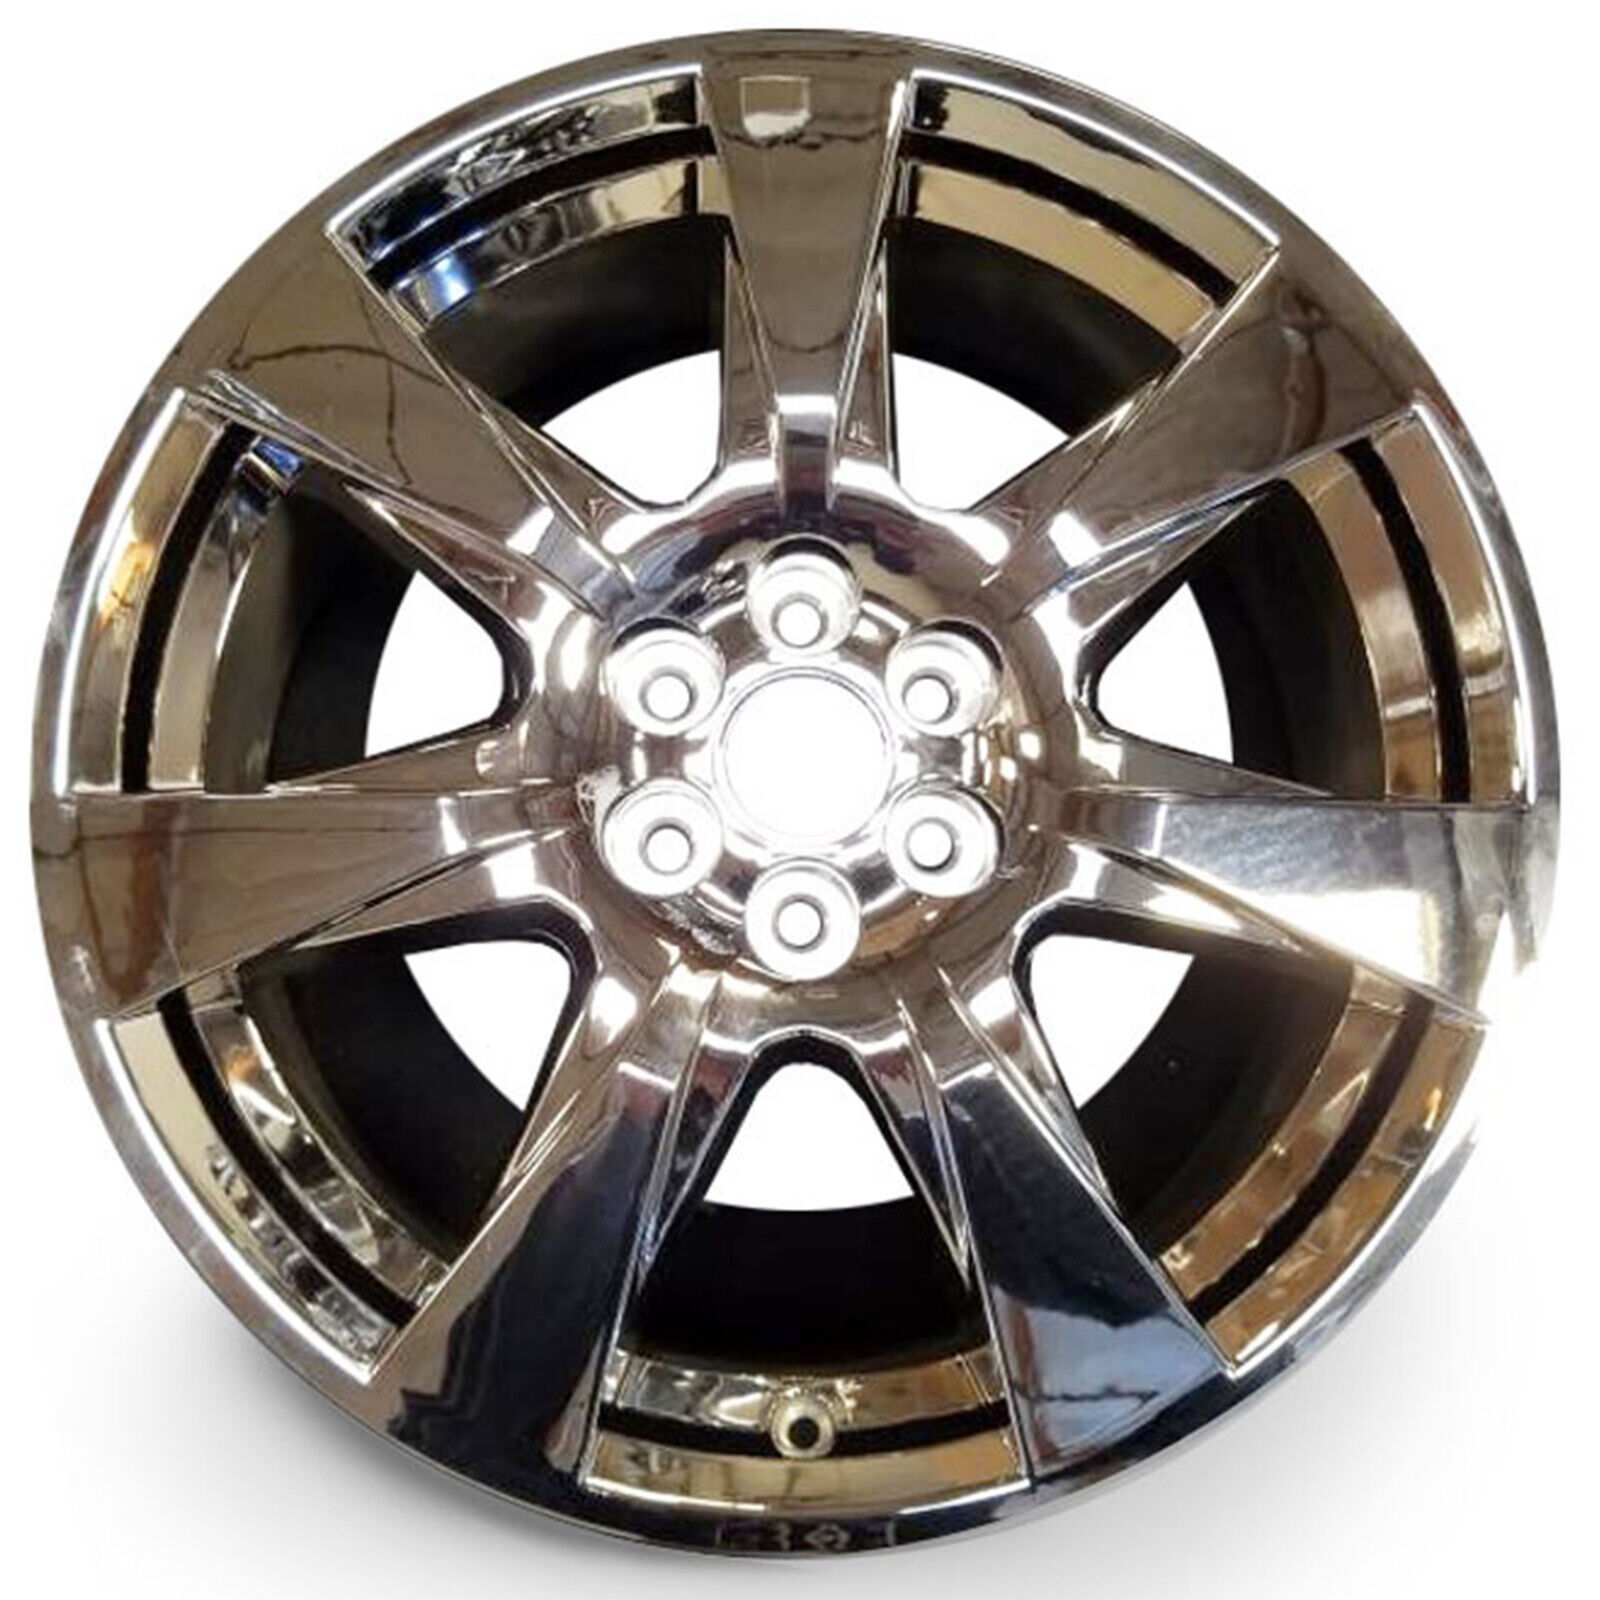 For Cadillac SRX OEM Design Wheel 20